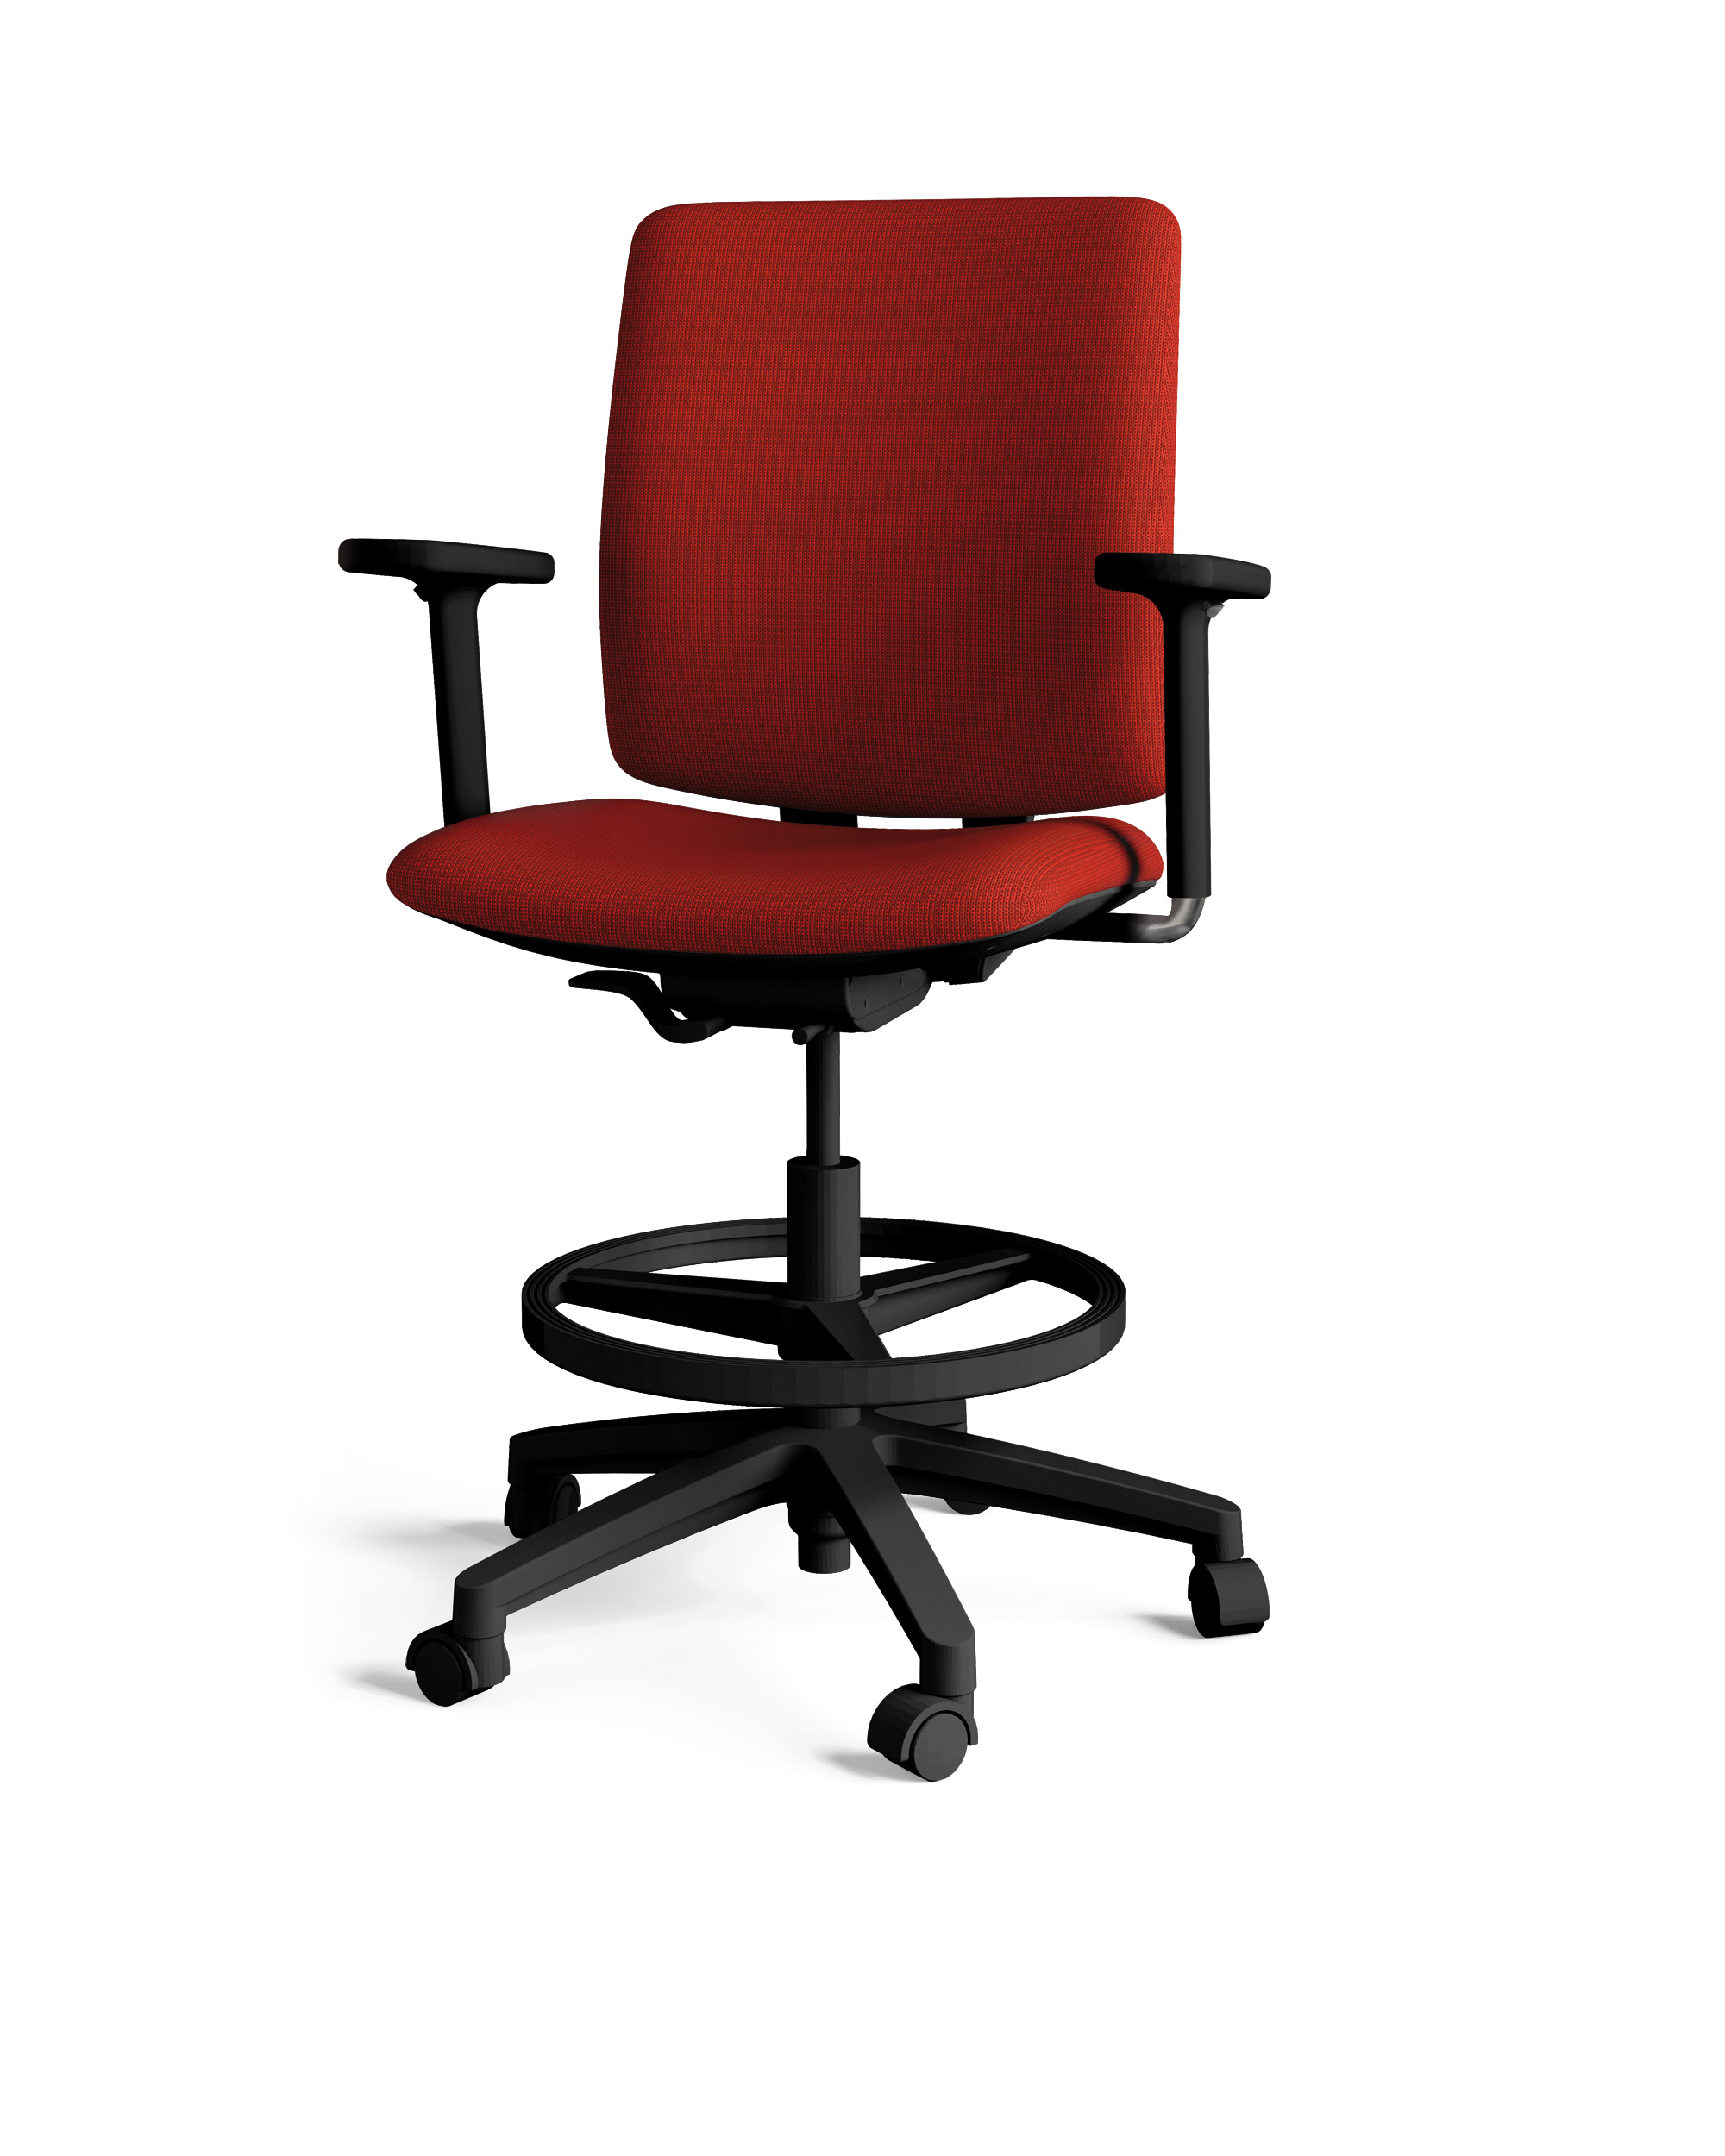 Chair-design-23.jpg